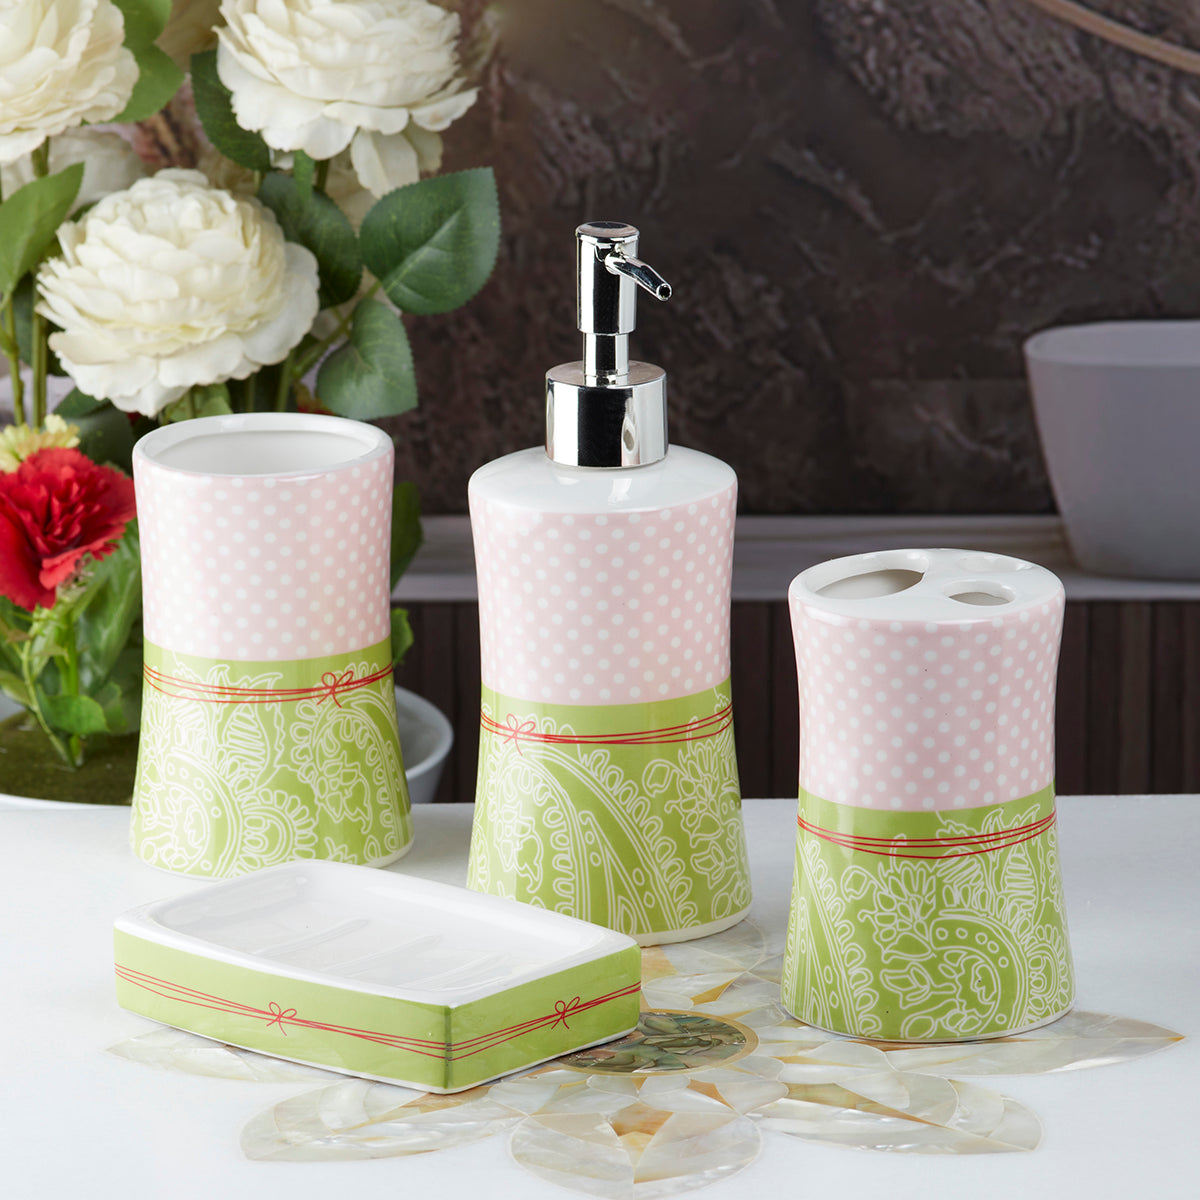 Ceramic Bathroom Accessories Set of 4 Bath Set with Soap Dispenser (8173)